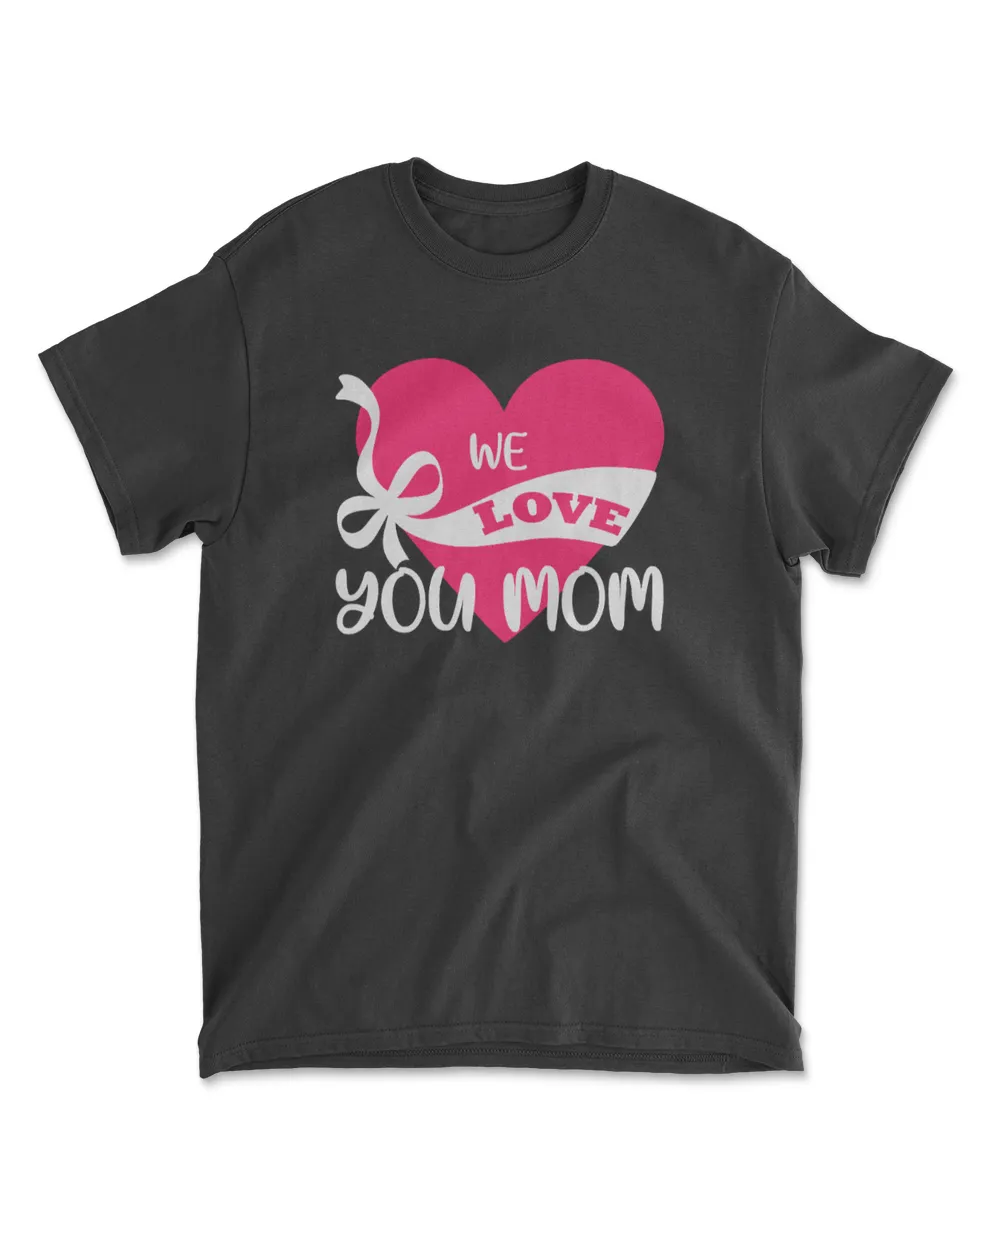 We love you mom tee t shirt